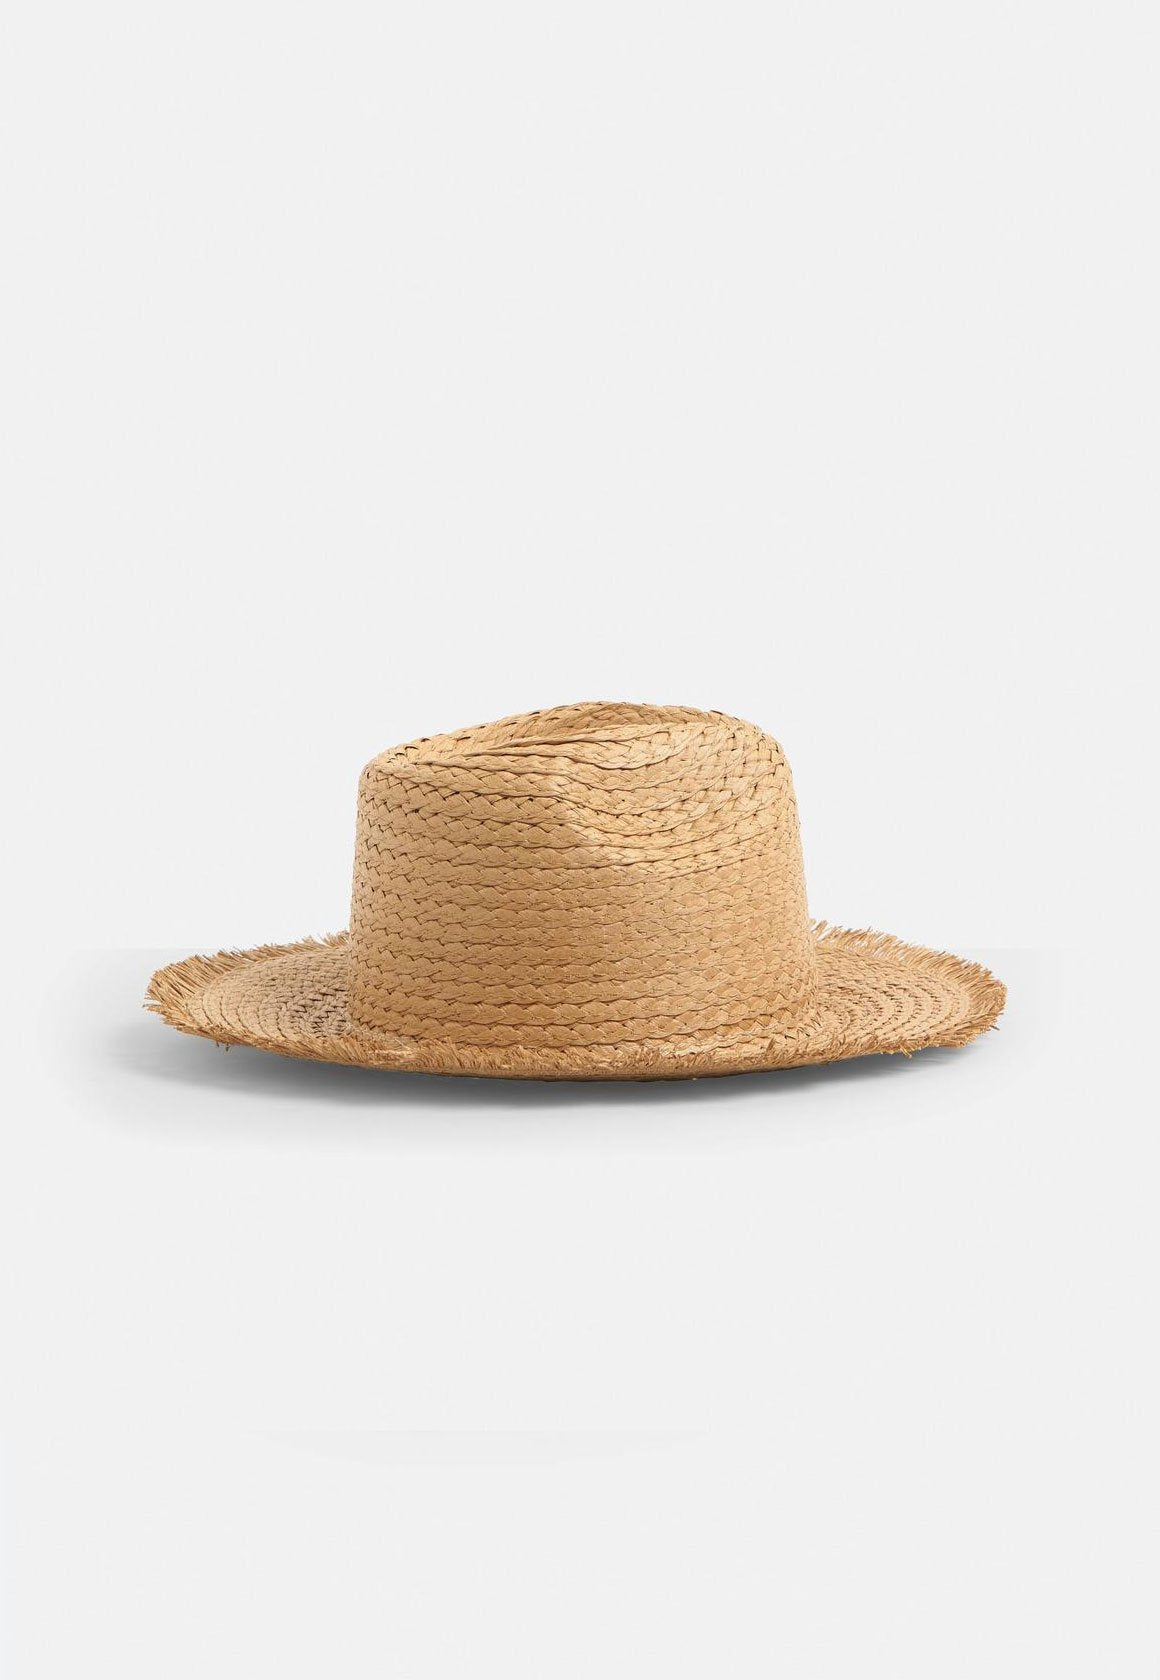 Life of soleil straw hat